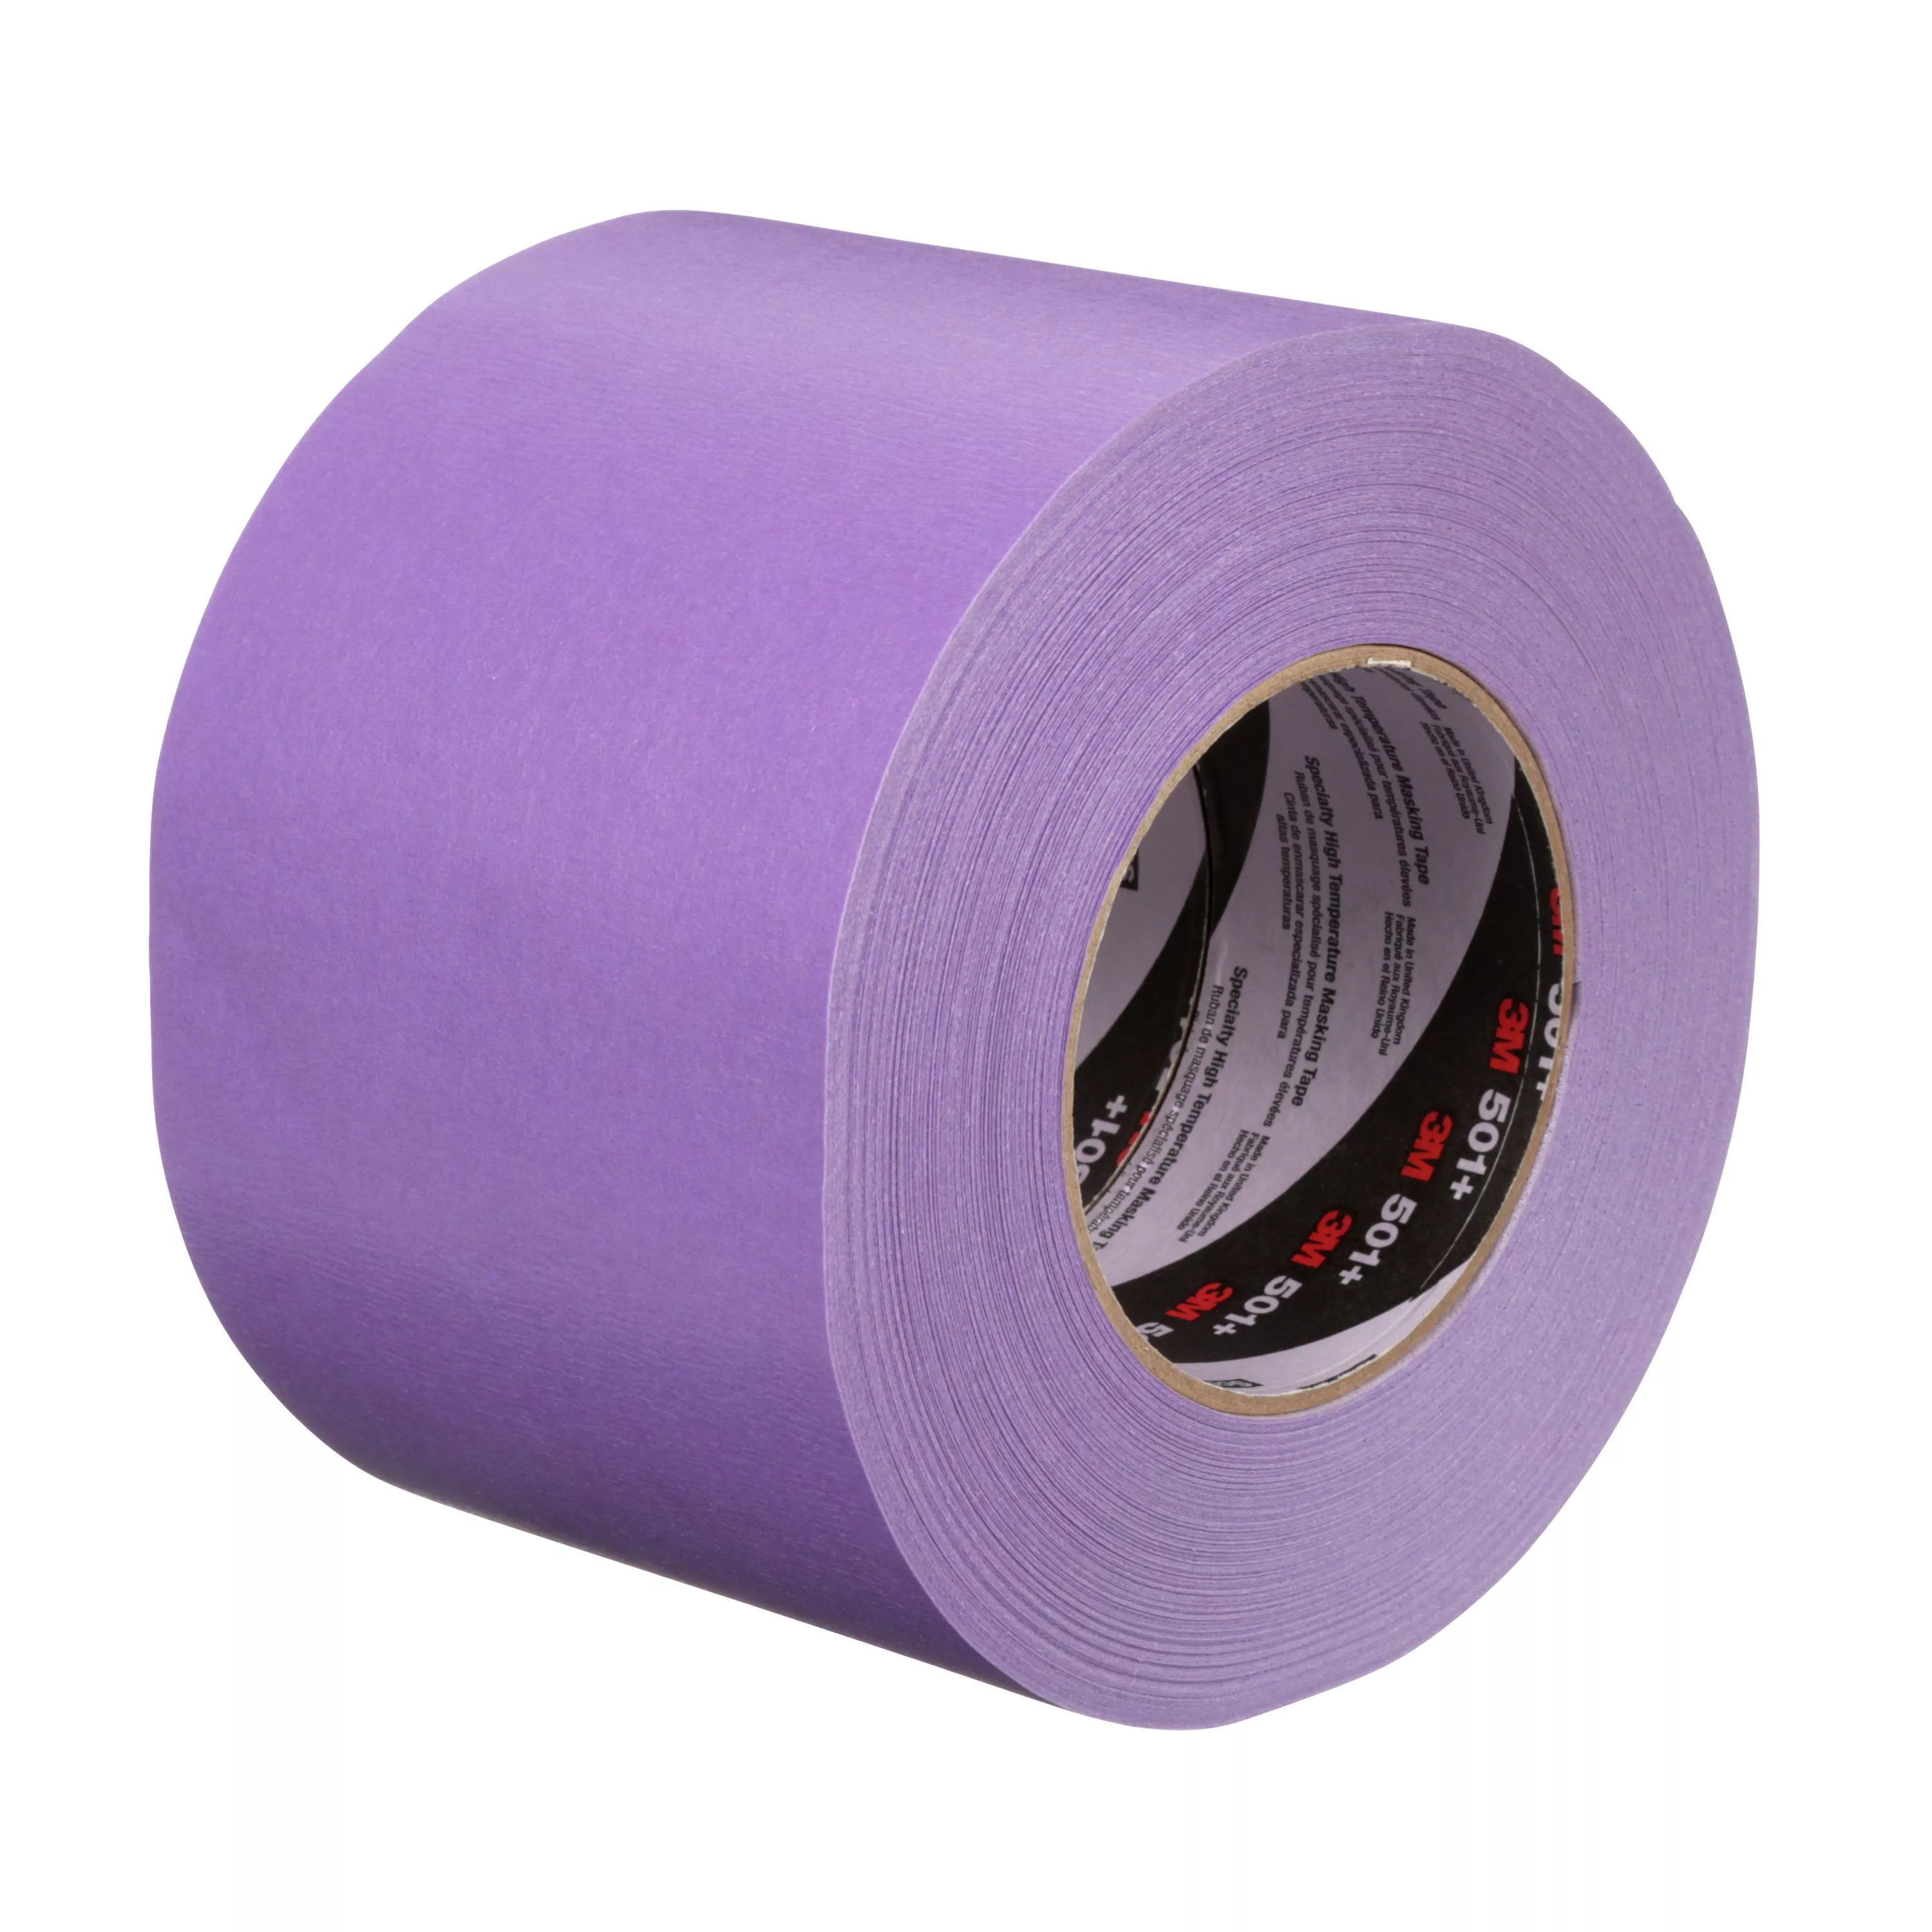 3M™ Specialty High Temperature Masking Tape 501+, Purple, 100 mm x 55
m,
 8 Rolls/Case